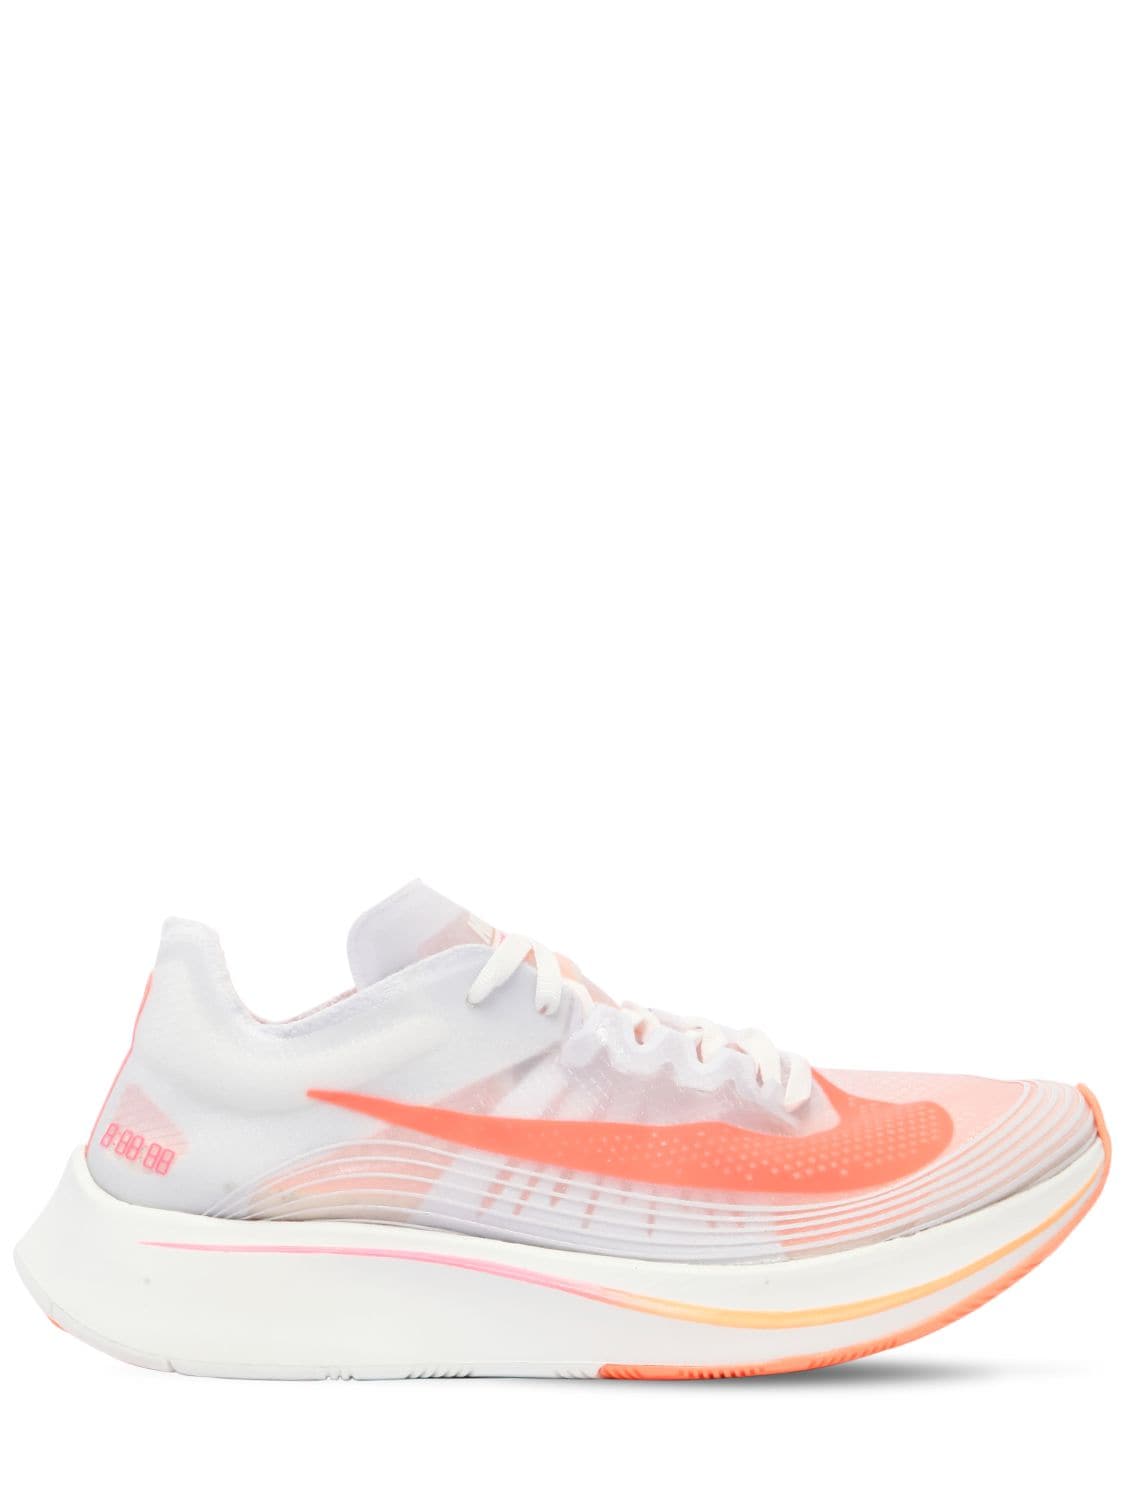 Nike Zoom Fly Sneakers In White/orange